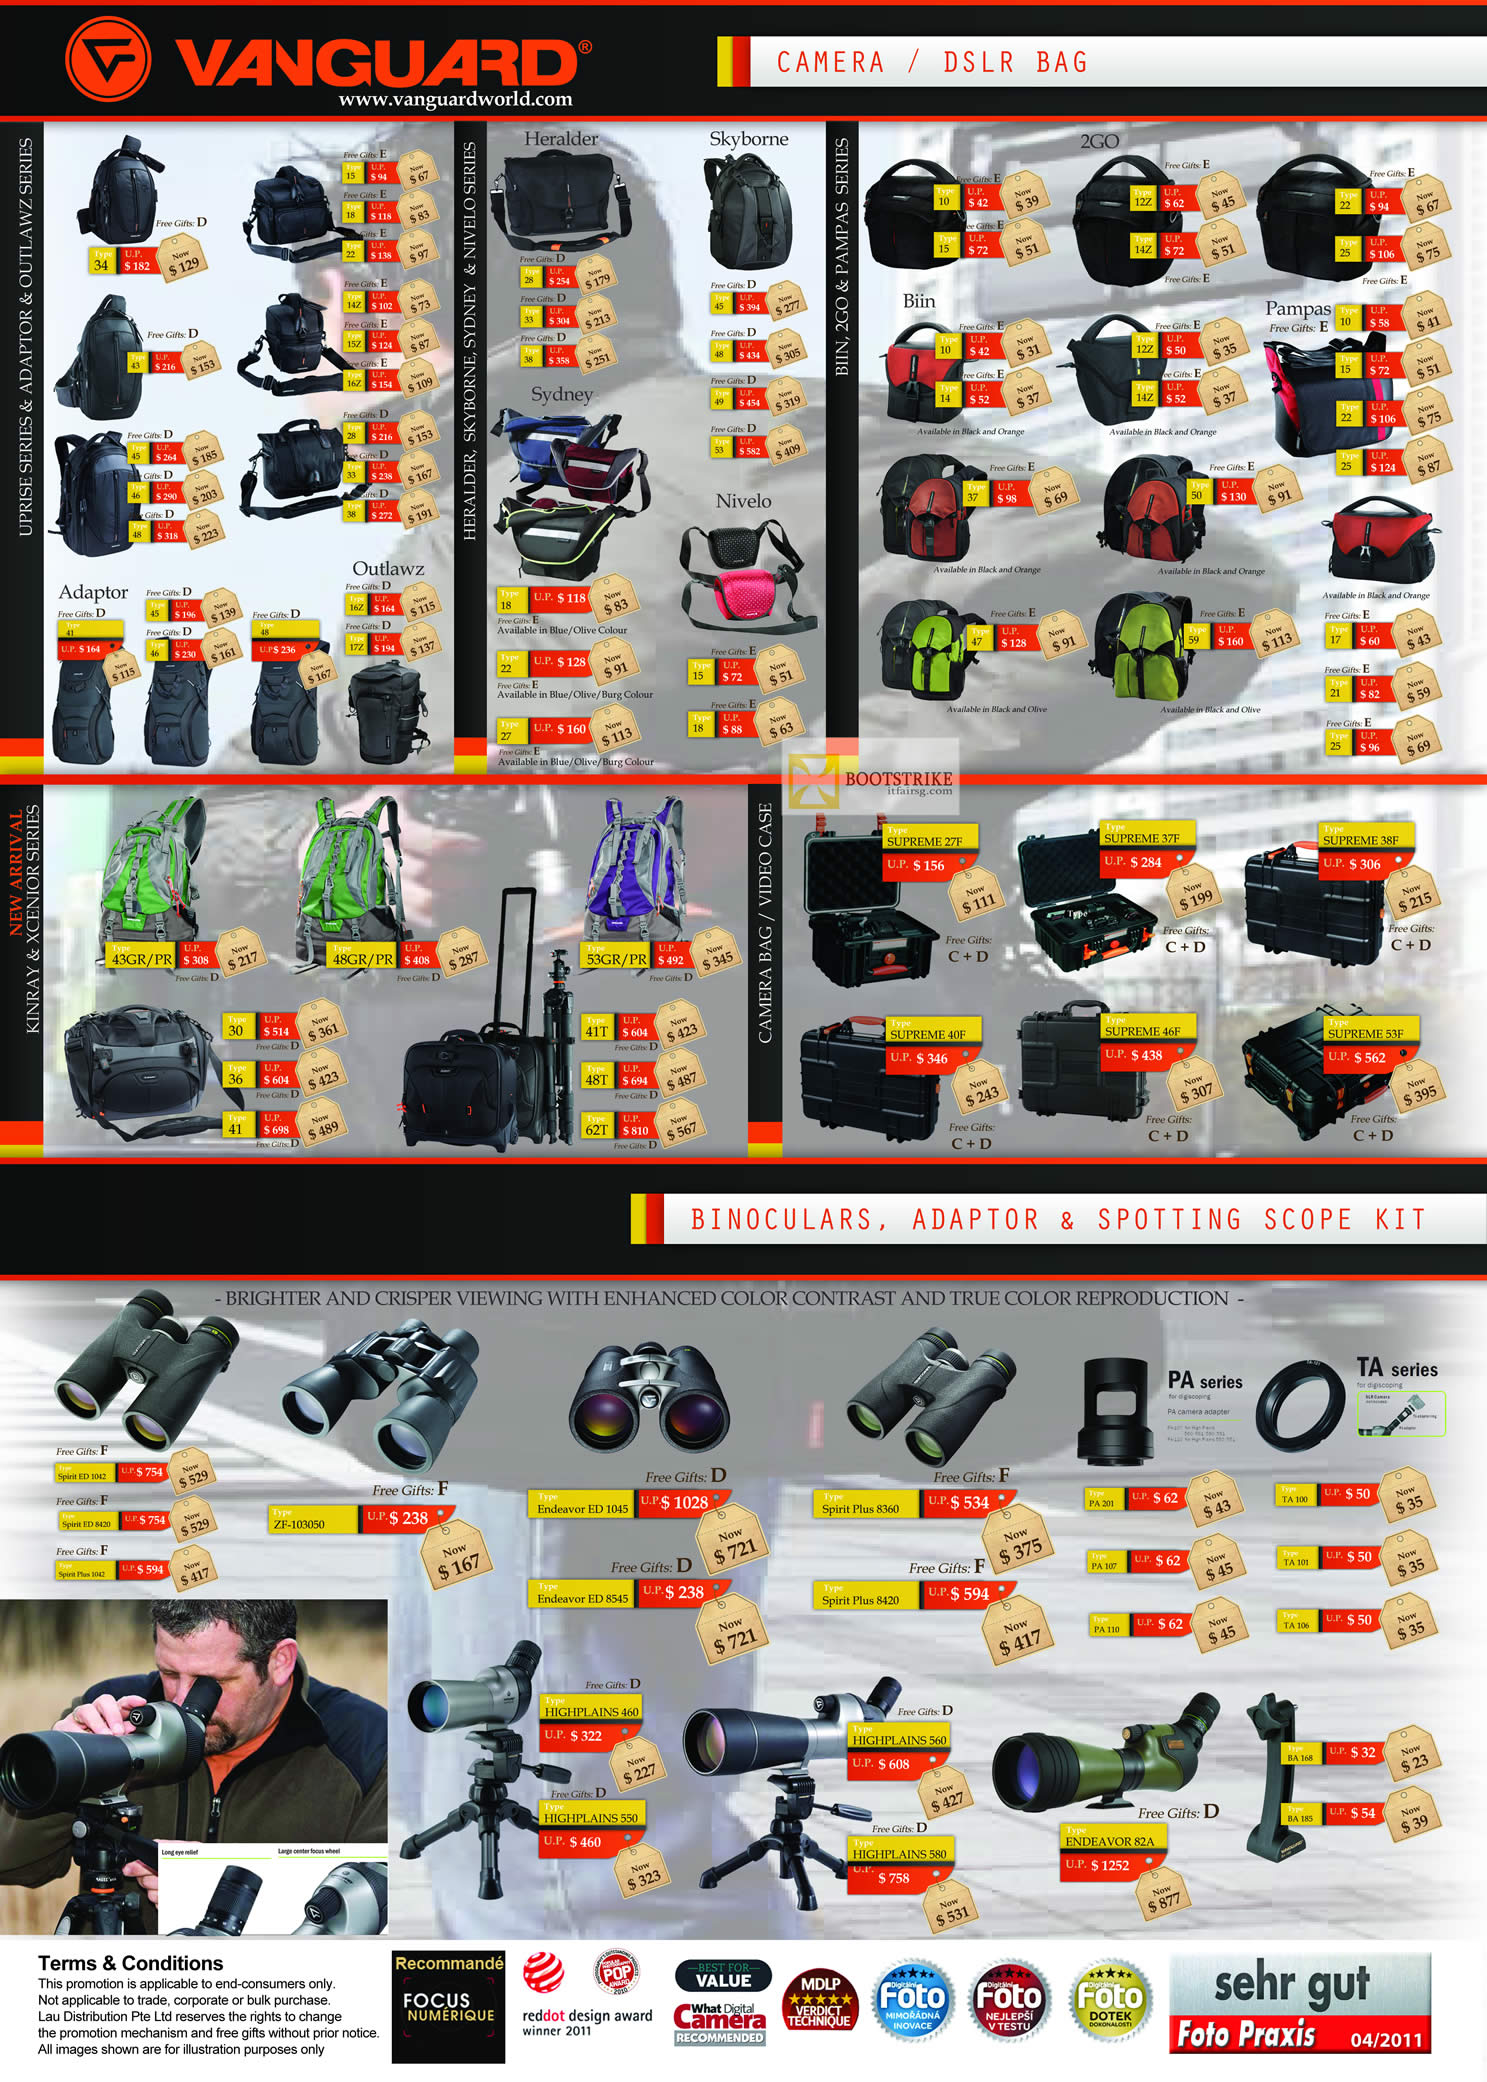 IT SHOW 2012 price list image brochure of Lau Intl Vanguard Camera DSLR Bag, Heralder, Skyborne, 2Go, Binn, Nivelo, Sydney, Outlaqz, Adaptor, Supreme, Binoculars, Spotting Scope Kits